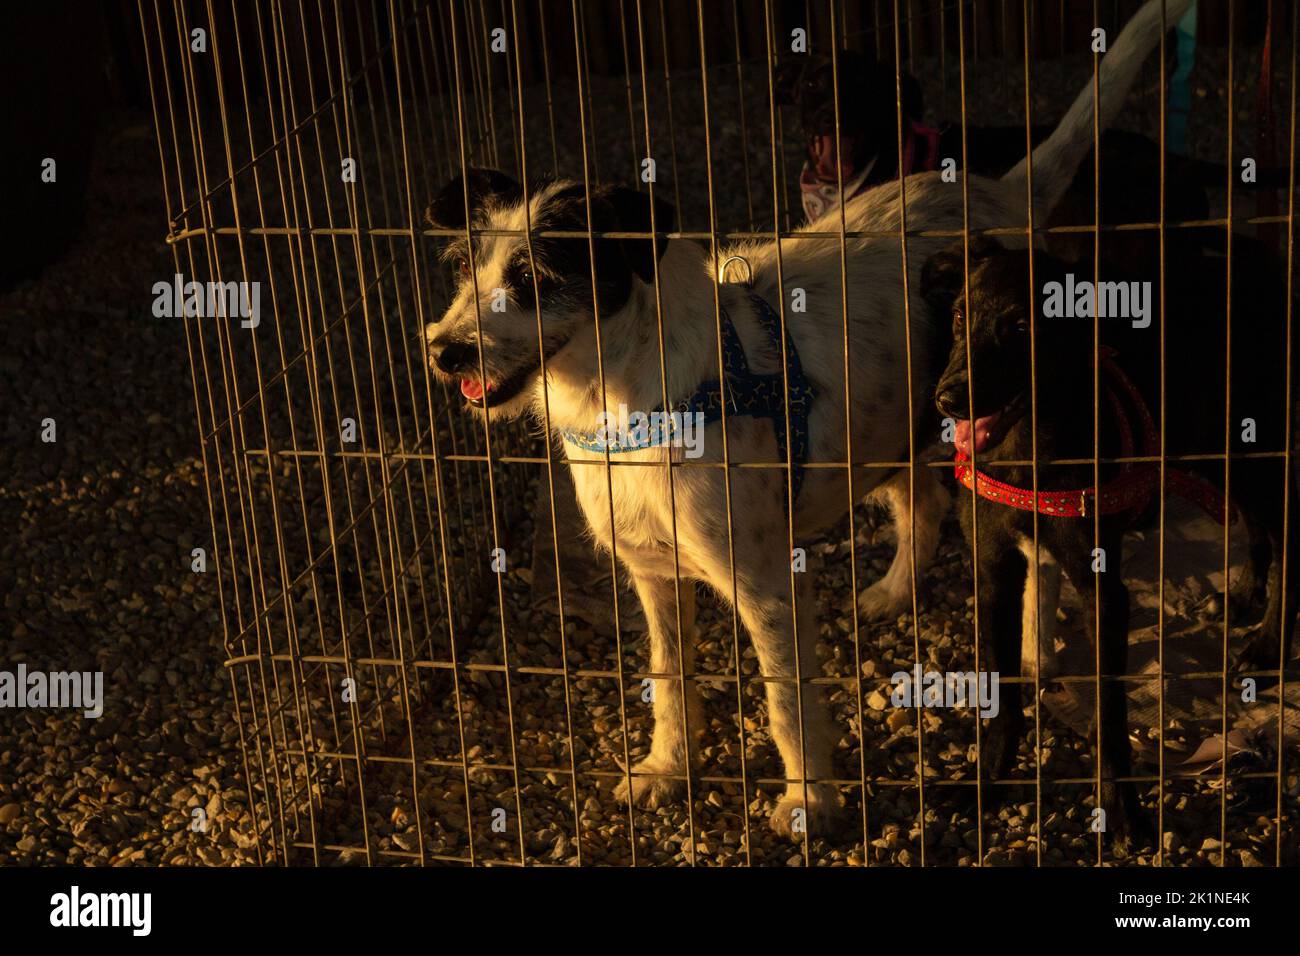 Goiânia, Goias, Brazil – September 17, 2022:  A furry black and white dog, on display inside a pen at an animal adoption fair in Goiania. Stock Photo